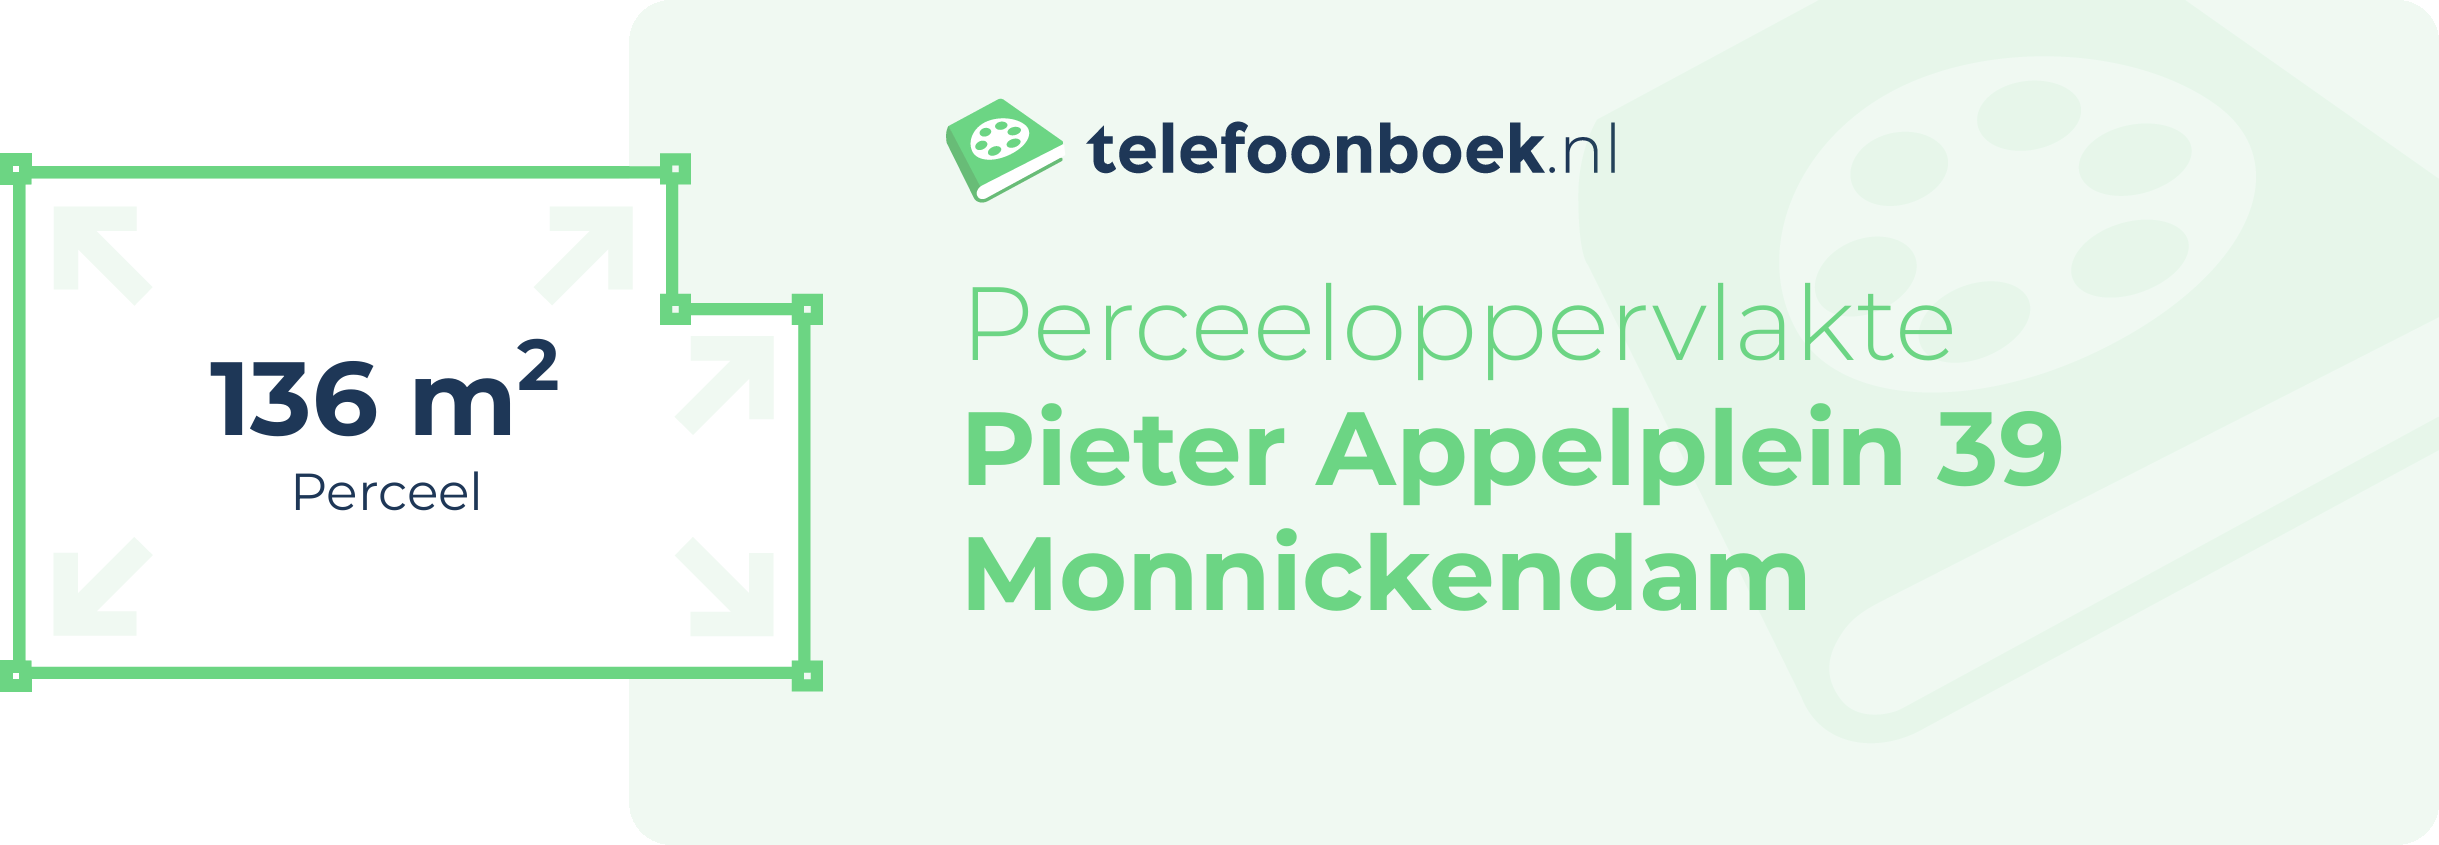 Perceeloppervlakte Pieter Appelplein 39 Monnickendam